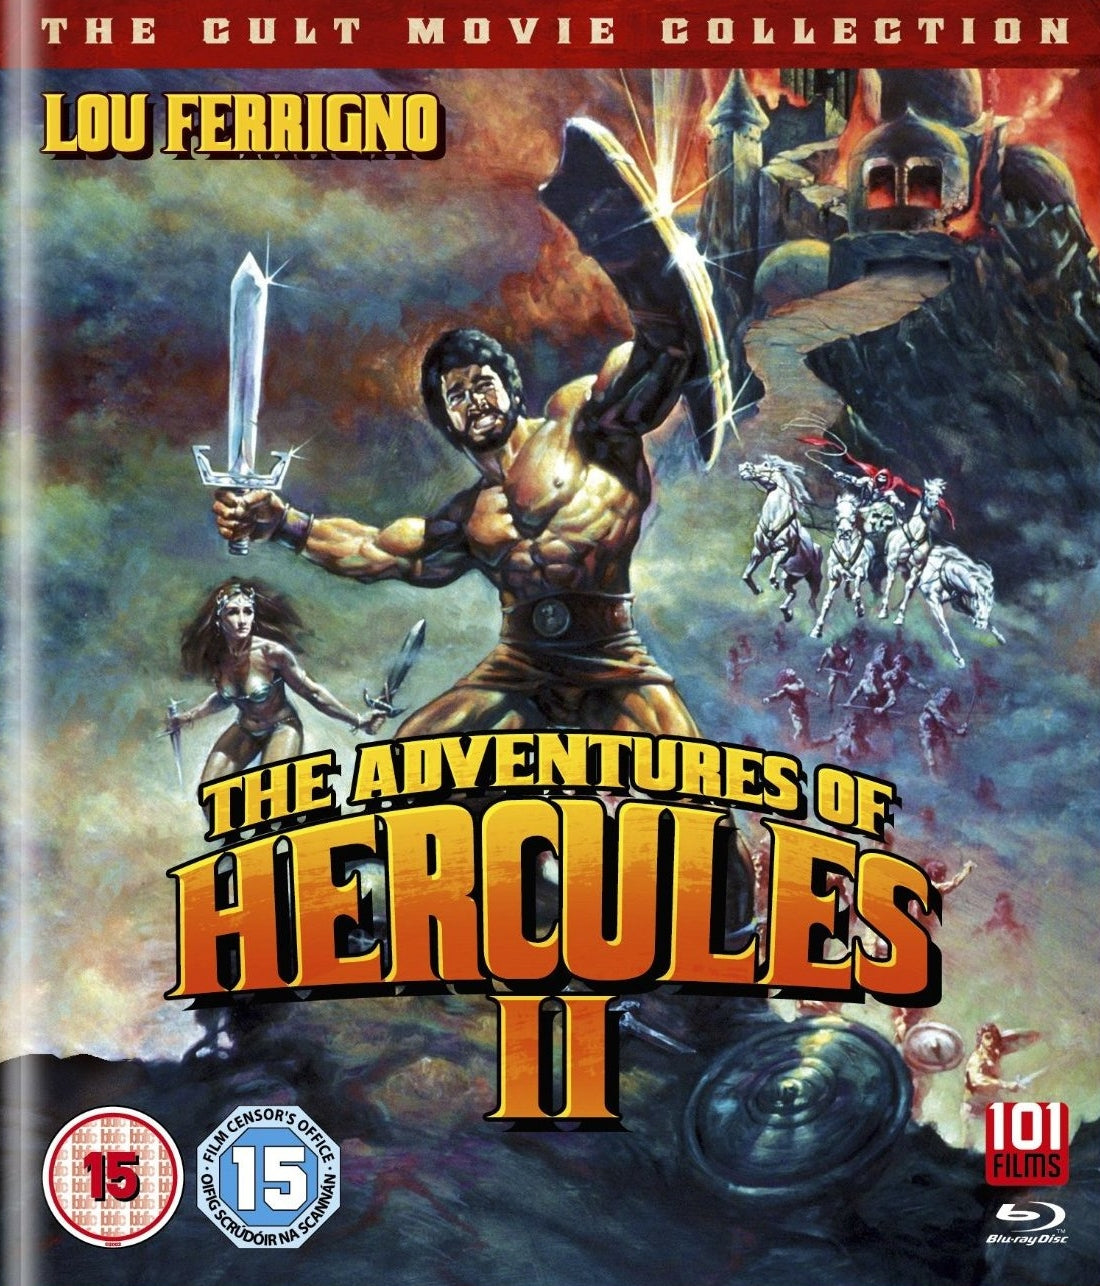 THE ADVENTURES OF HERCULES II (REGION B IMPORT) BLU-RAY